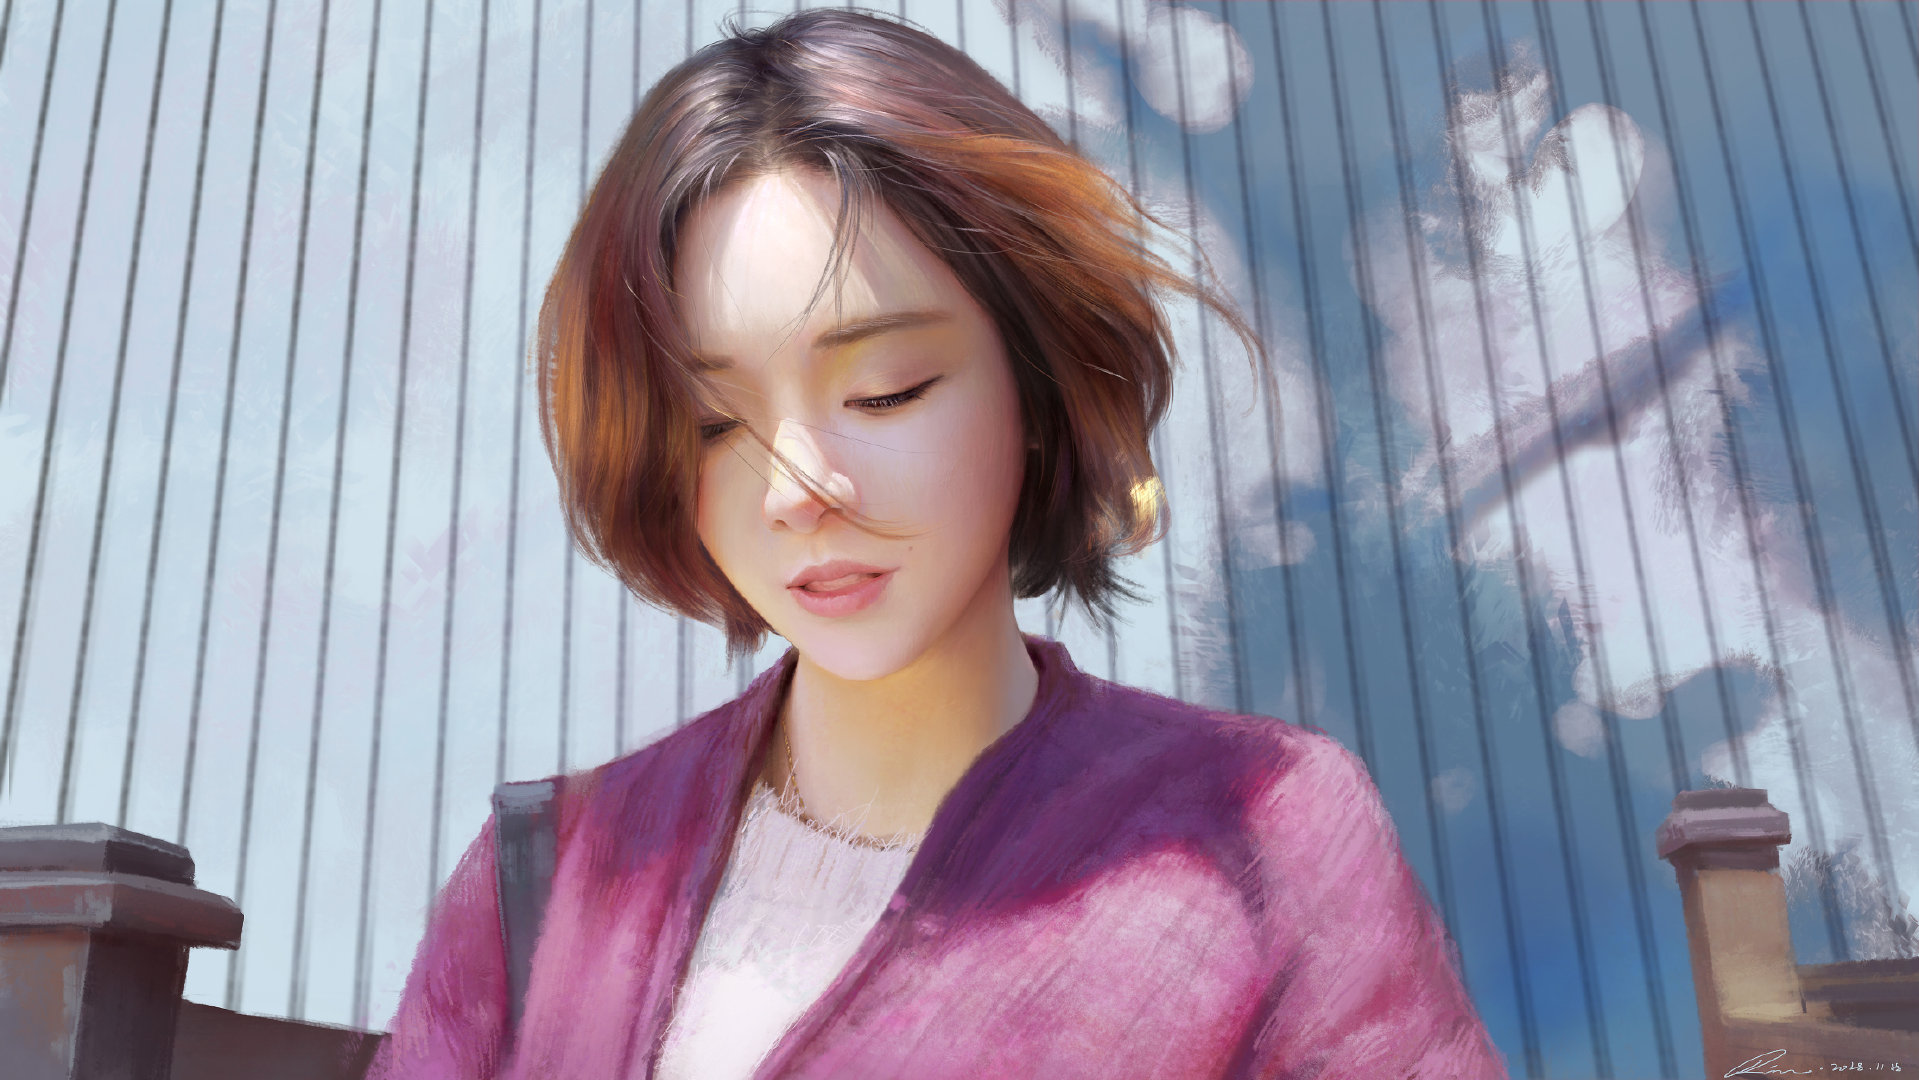 Chen Yi Fa Er Singer Asian Digital Painting 1919x1080